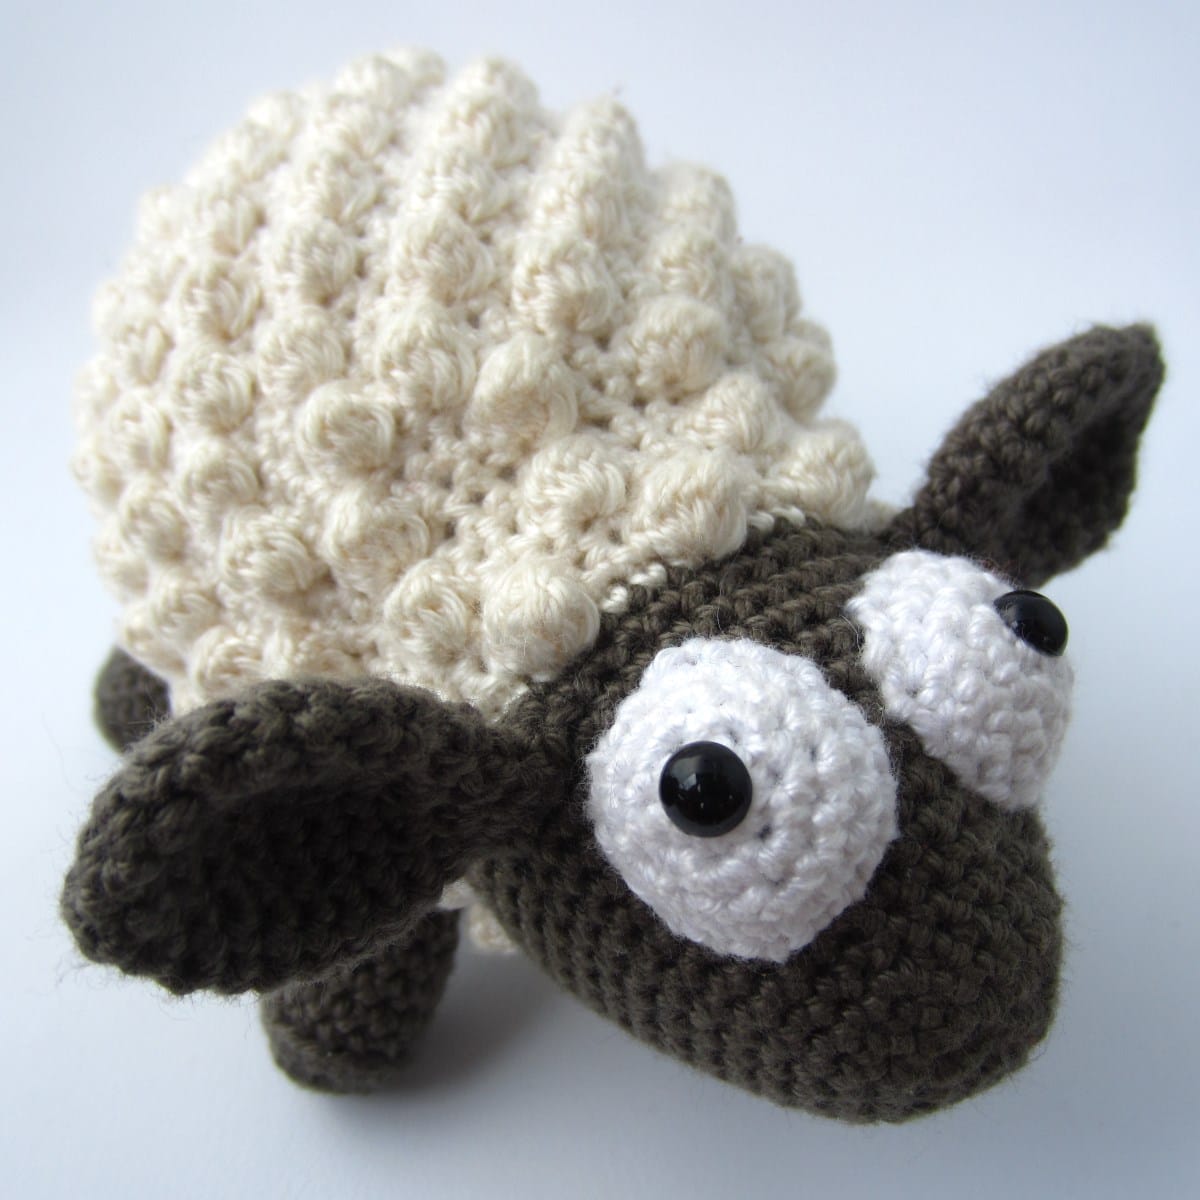 Amigurumi-Crochet-Sheep-Featured-Image.jpg